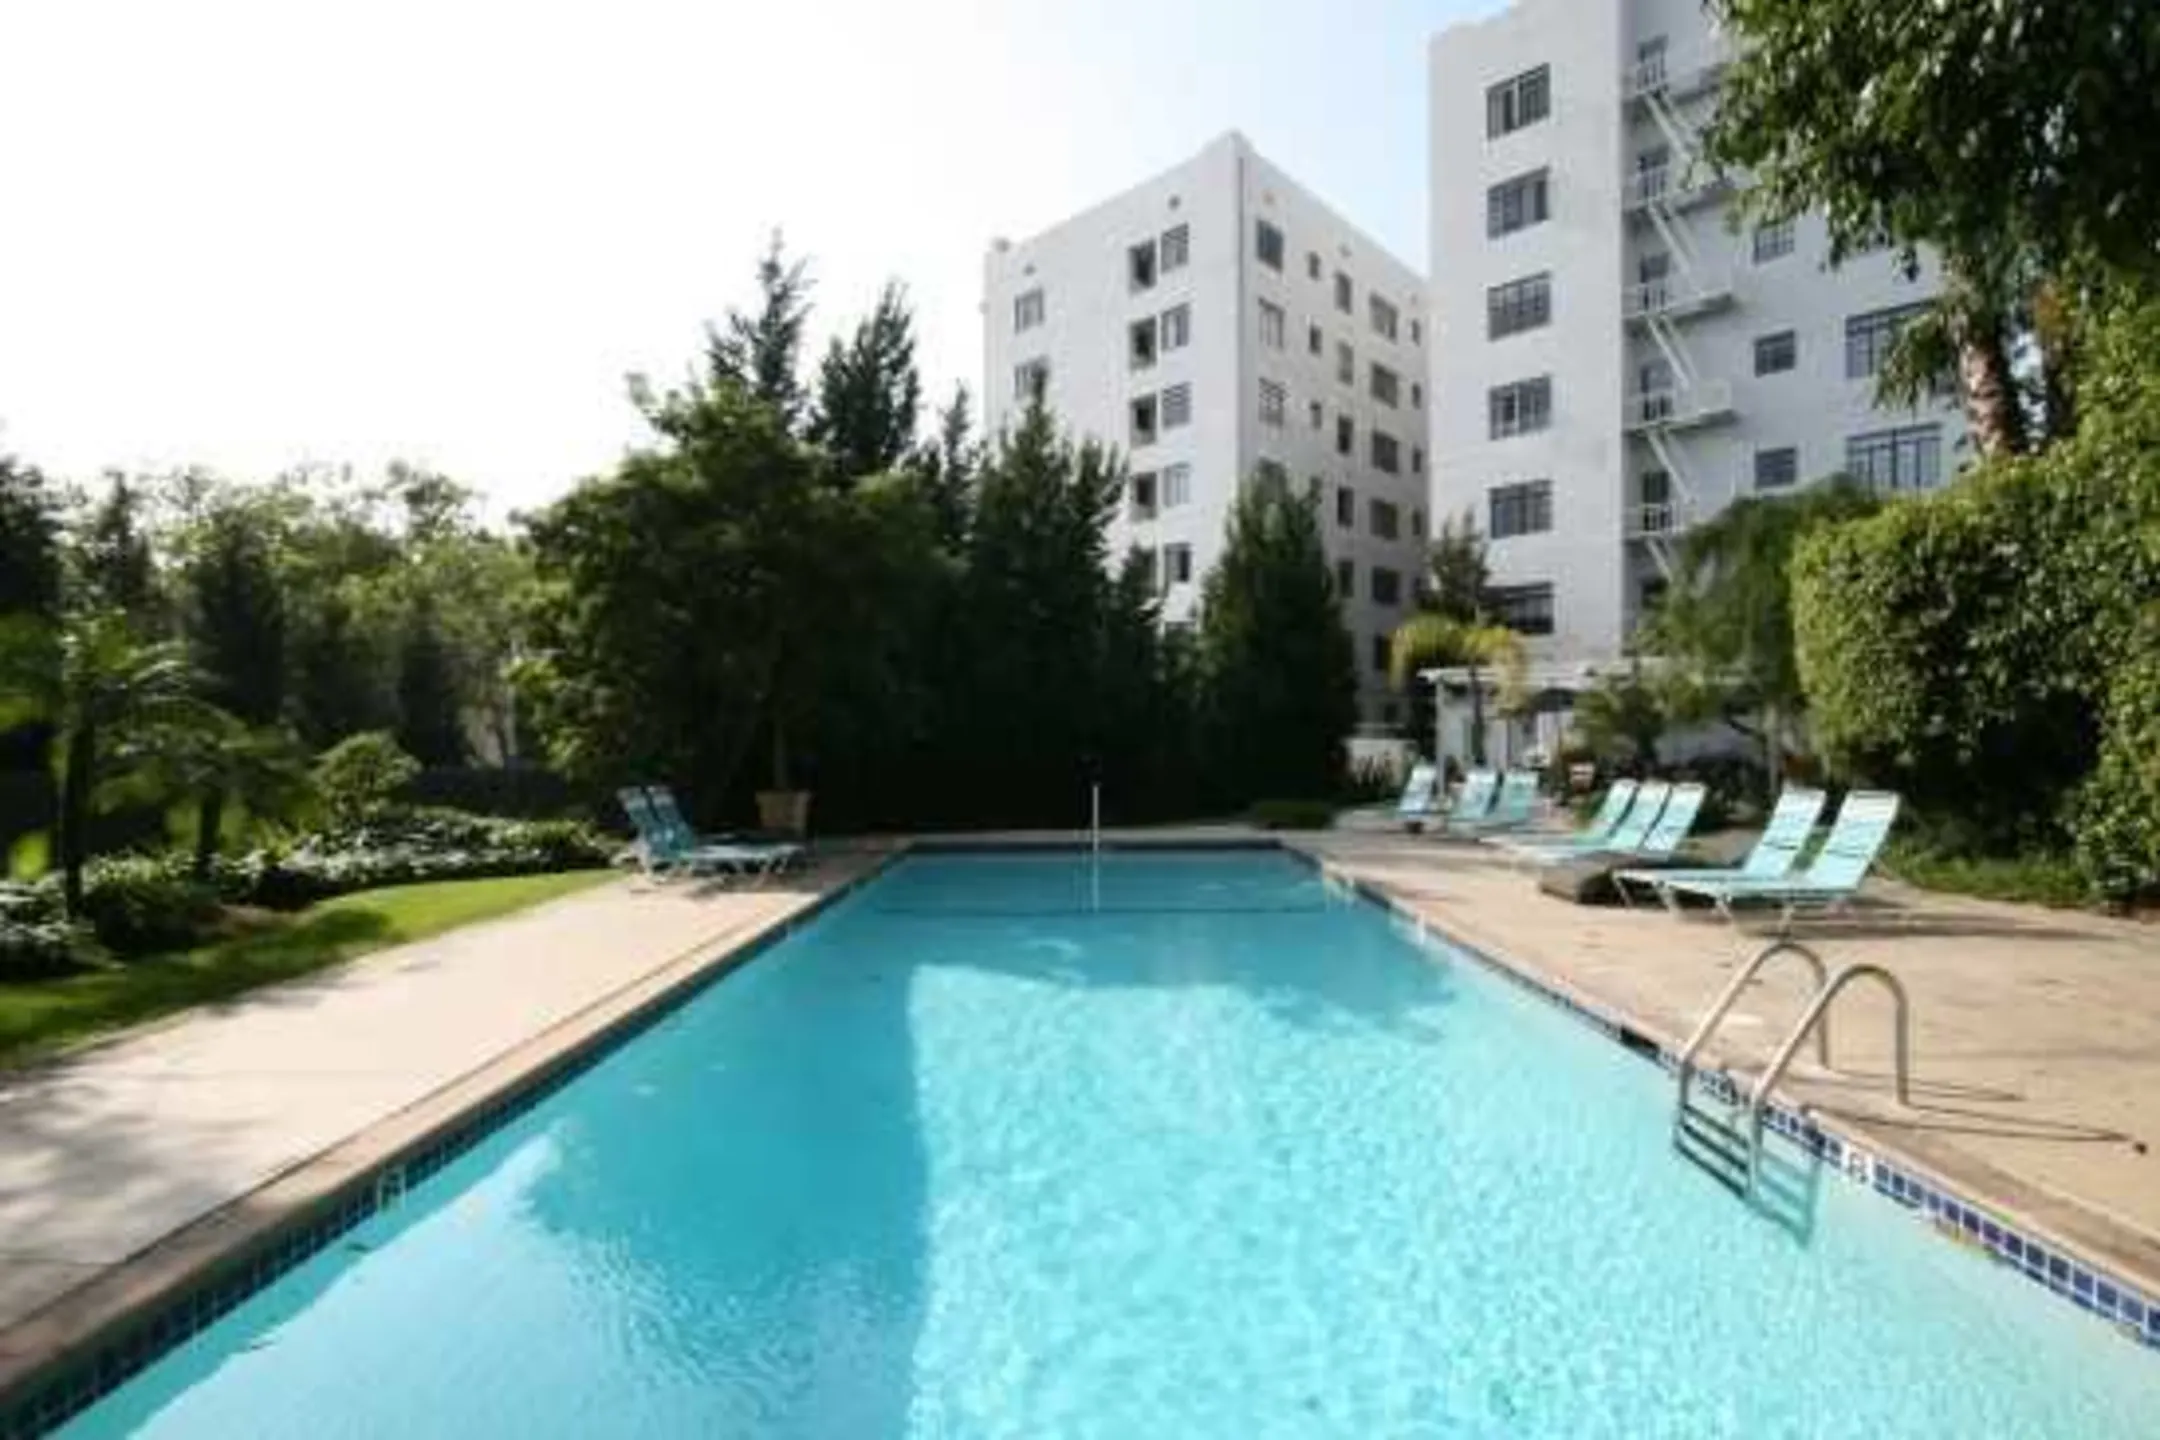 Pool - Mid-Wilshire Apartments - Los Angeles, CA